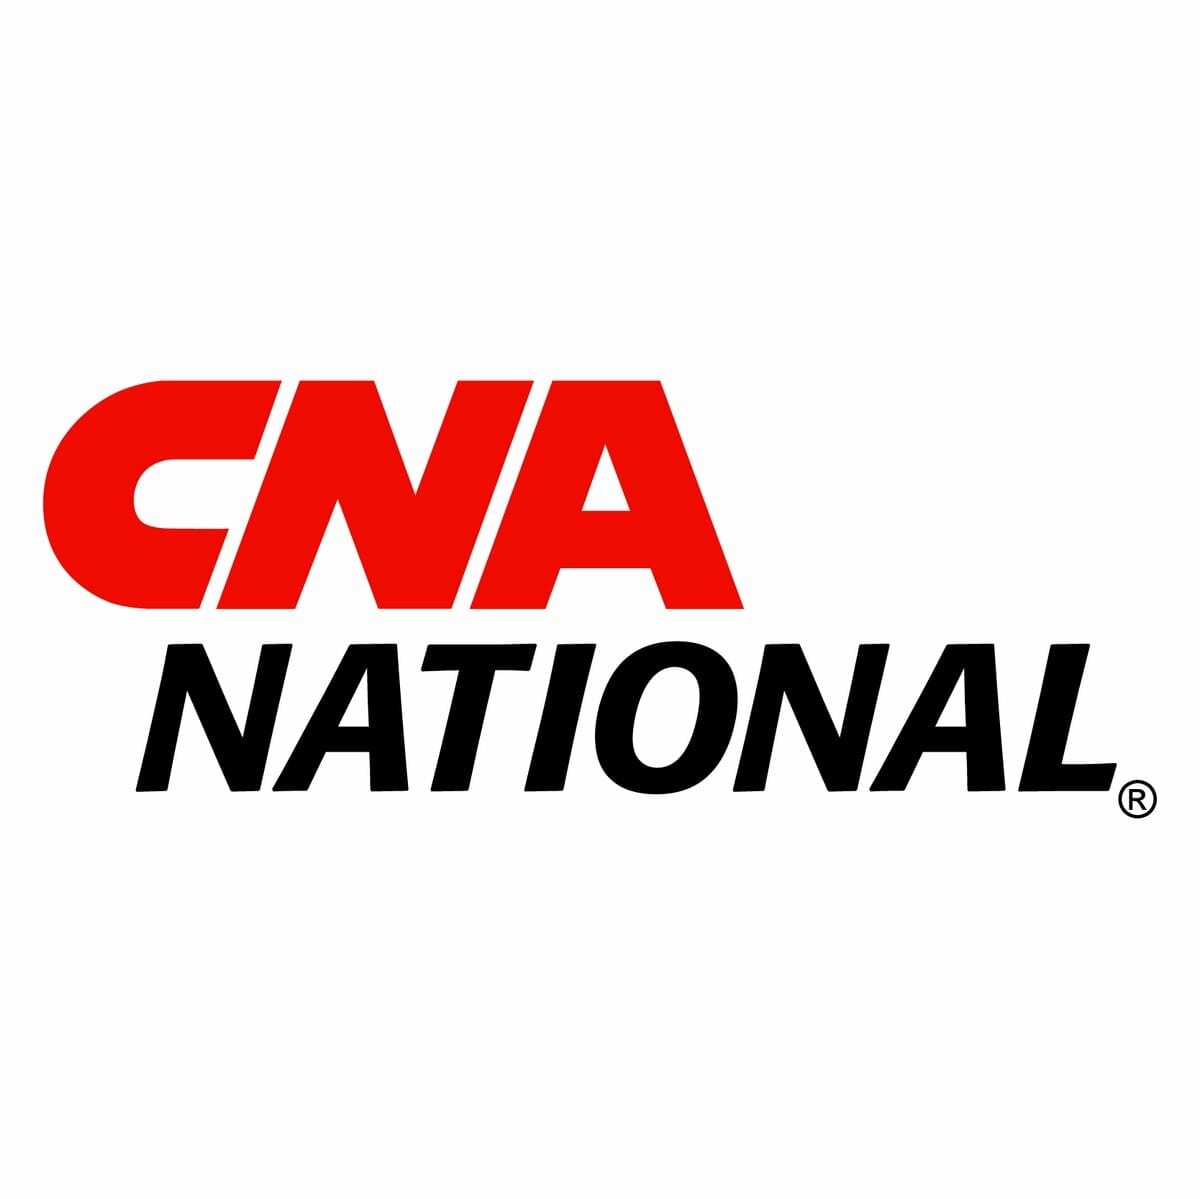 CNA National